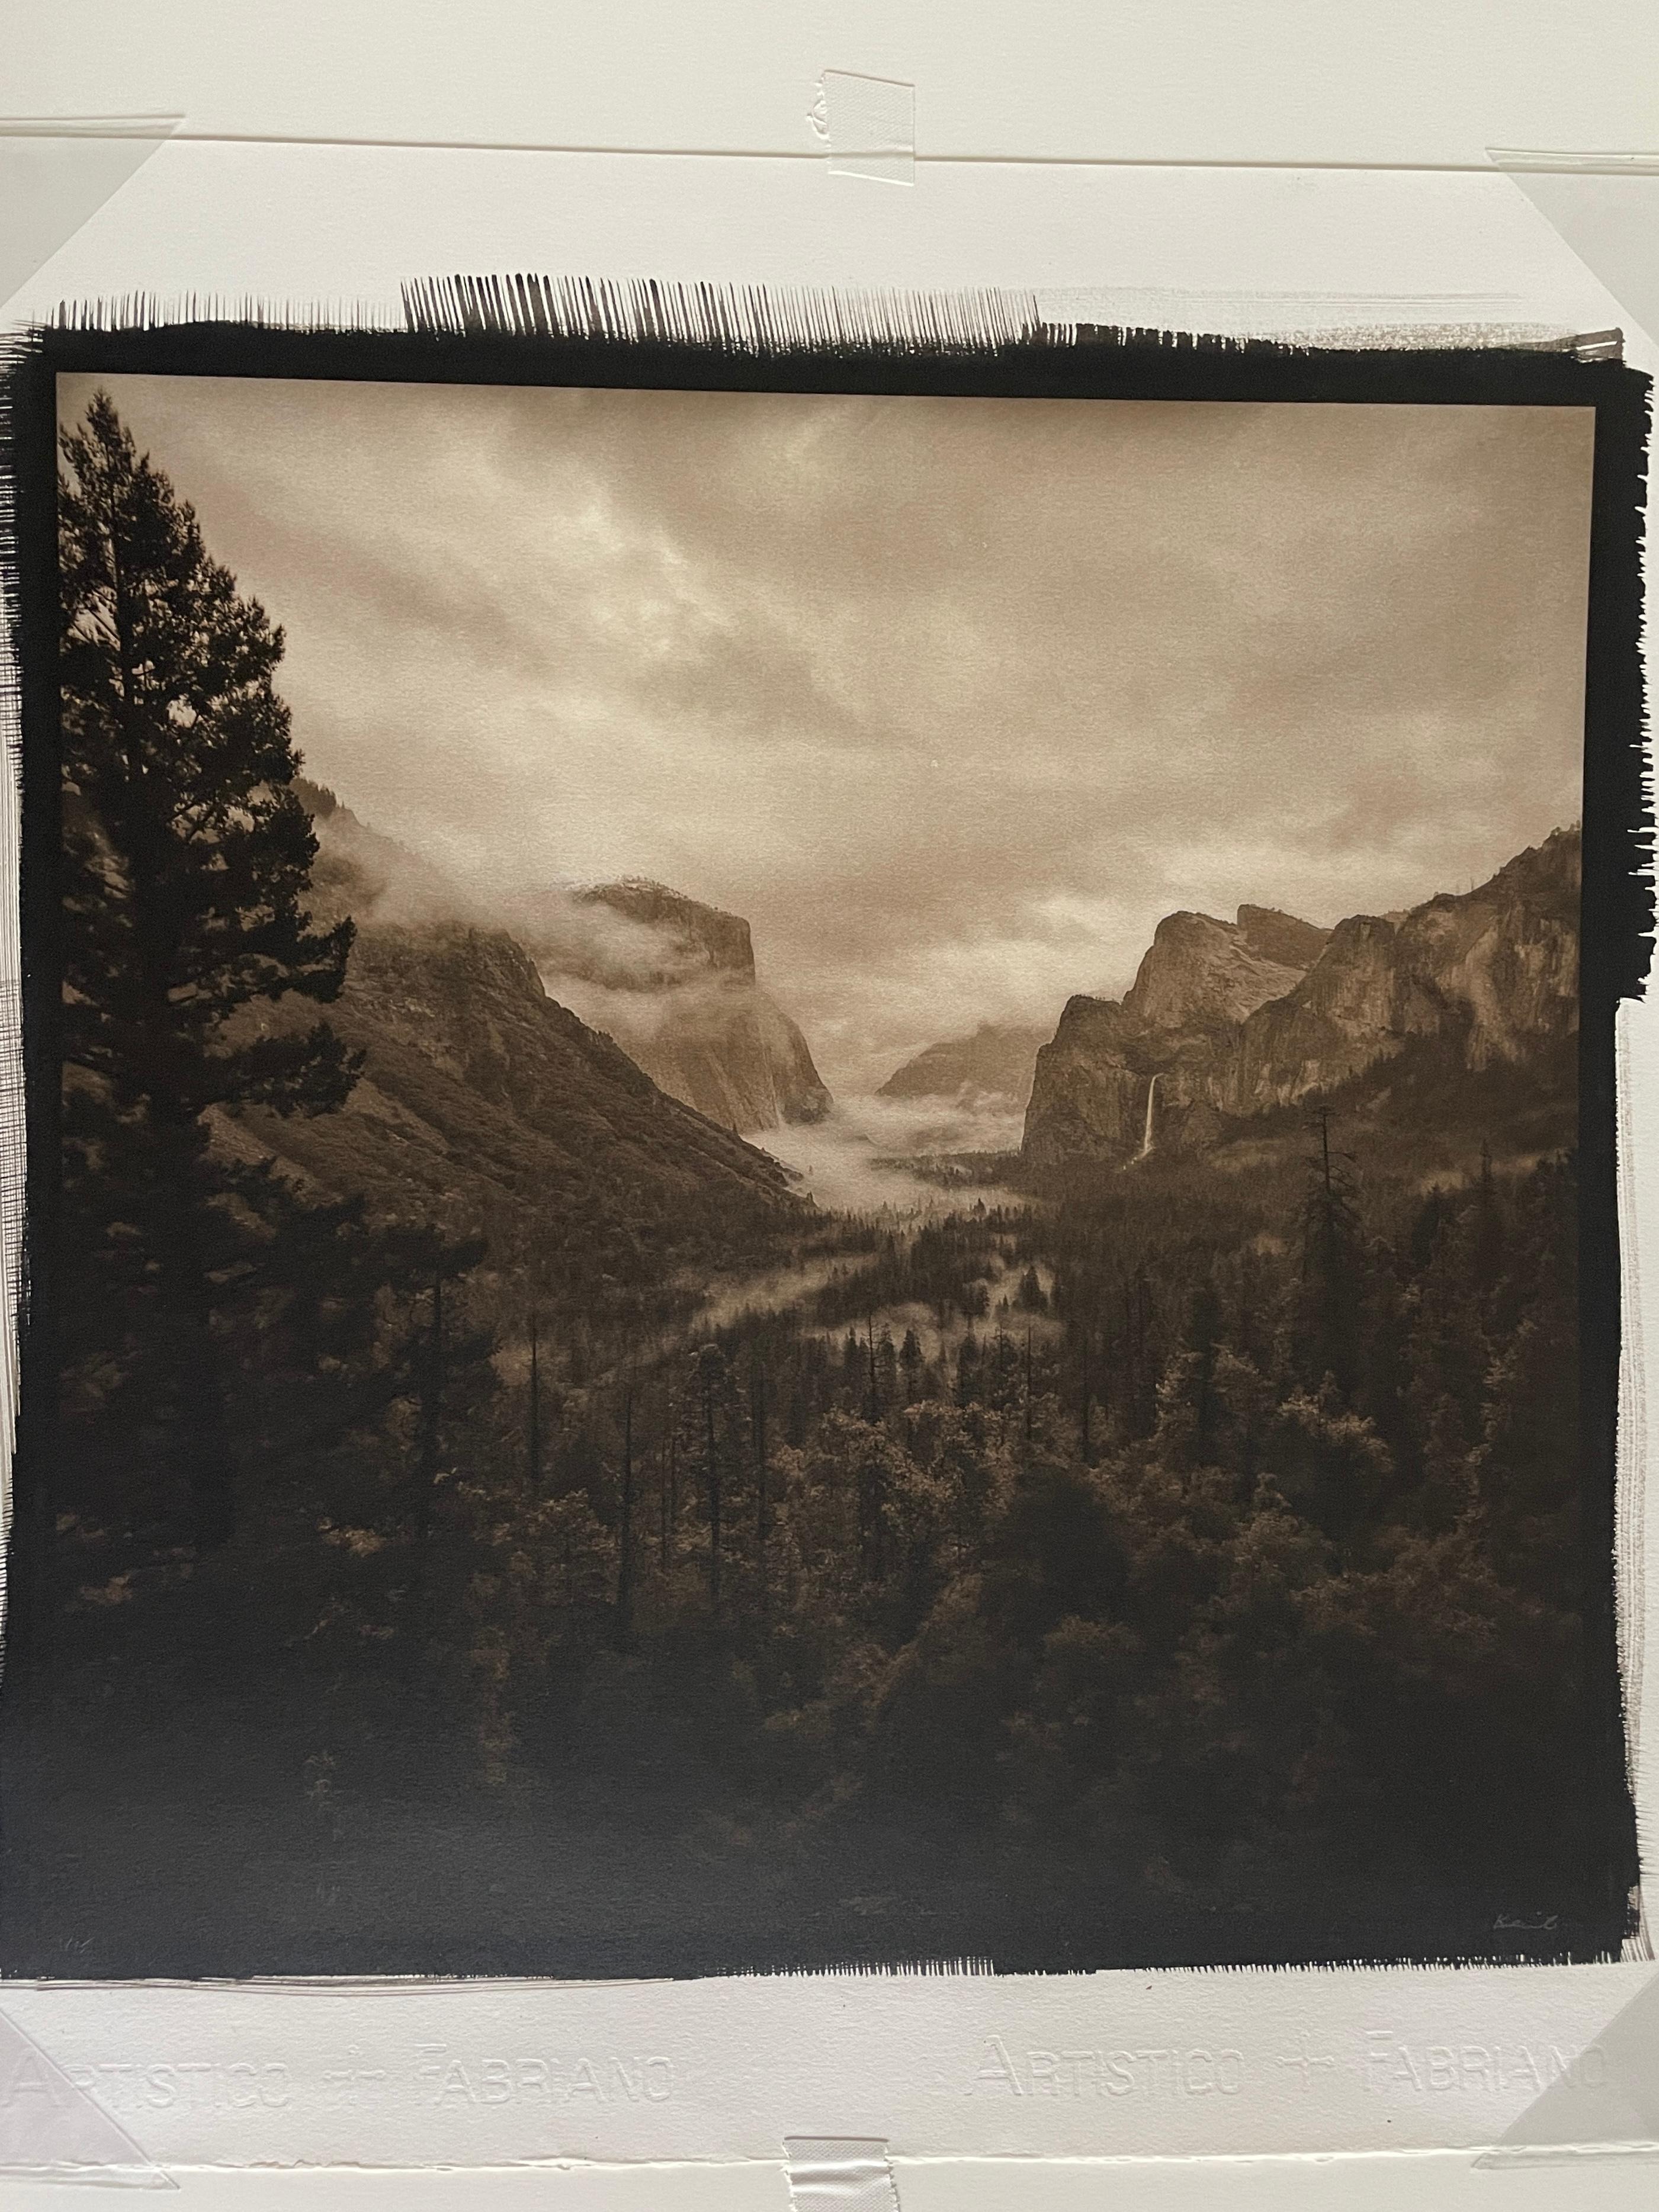 Tunnelblick 2, Yosemite National Park, Kalifornien – Photograph von Kerik Kouklis